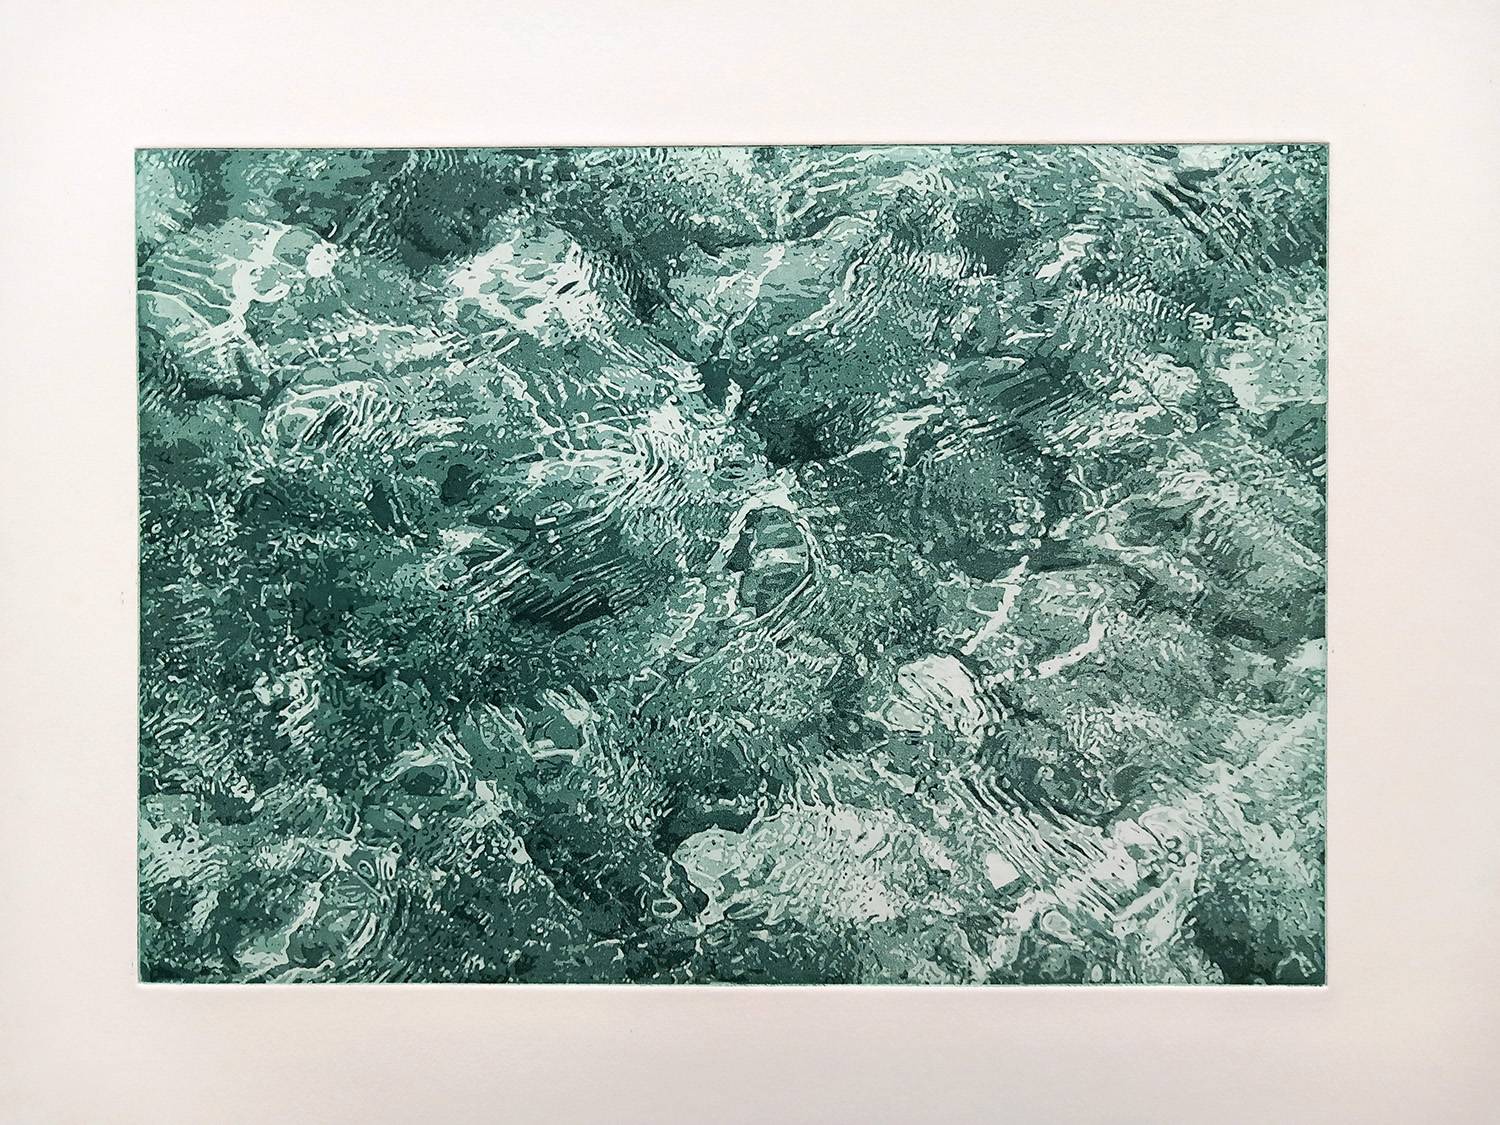 Flaque 1 | Aquatinte
28x38 cm - 2023